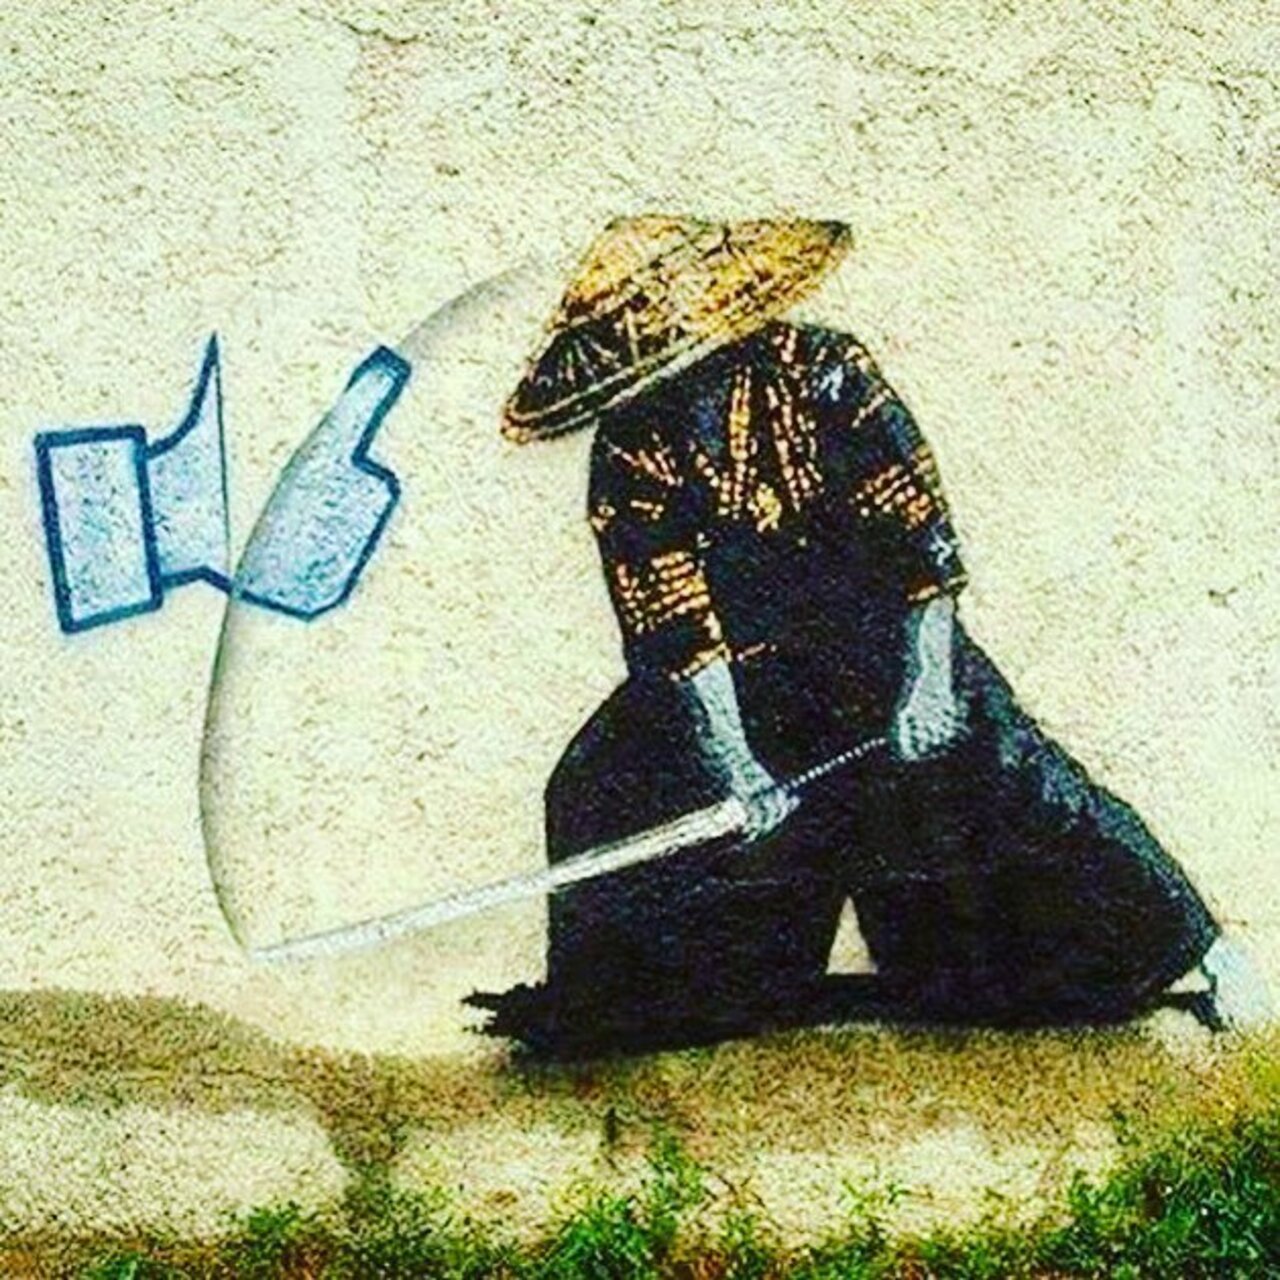 Likes created by @artnafir #artnafir #streetart #art #MrHOLLYWOOD #graffiti #sprayart #Banksy #Artist #MrBrainwas… https://t.co/Y4CR42BOI4